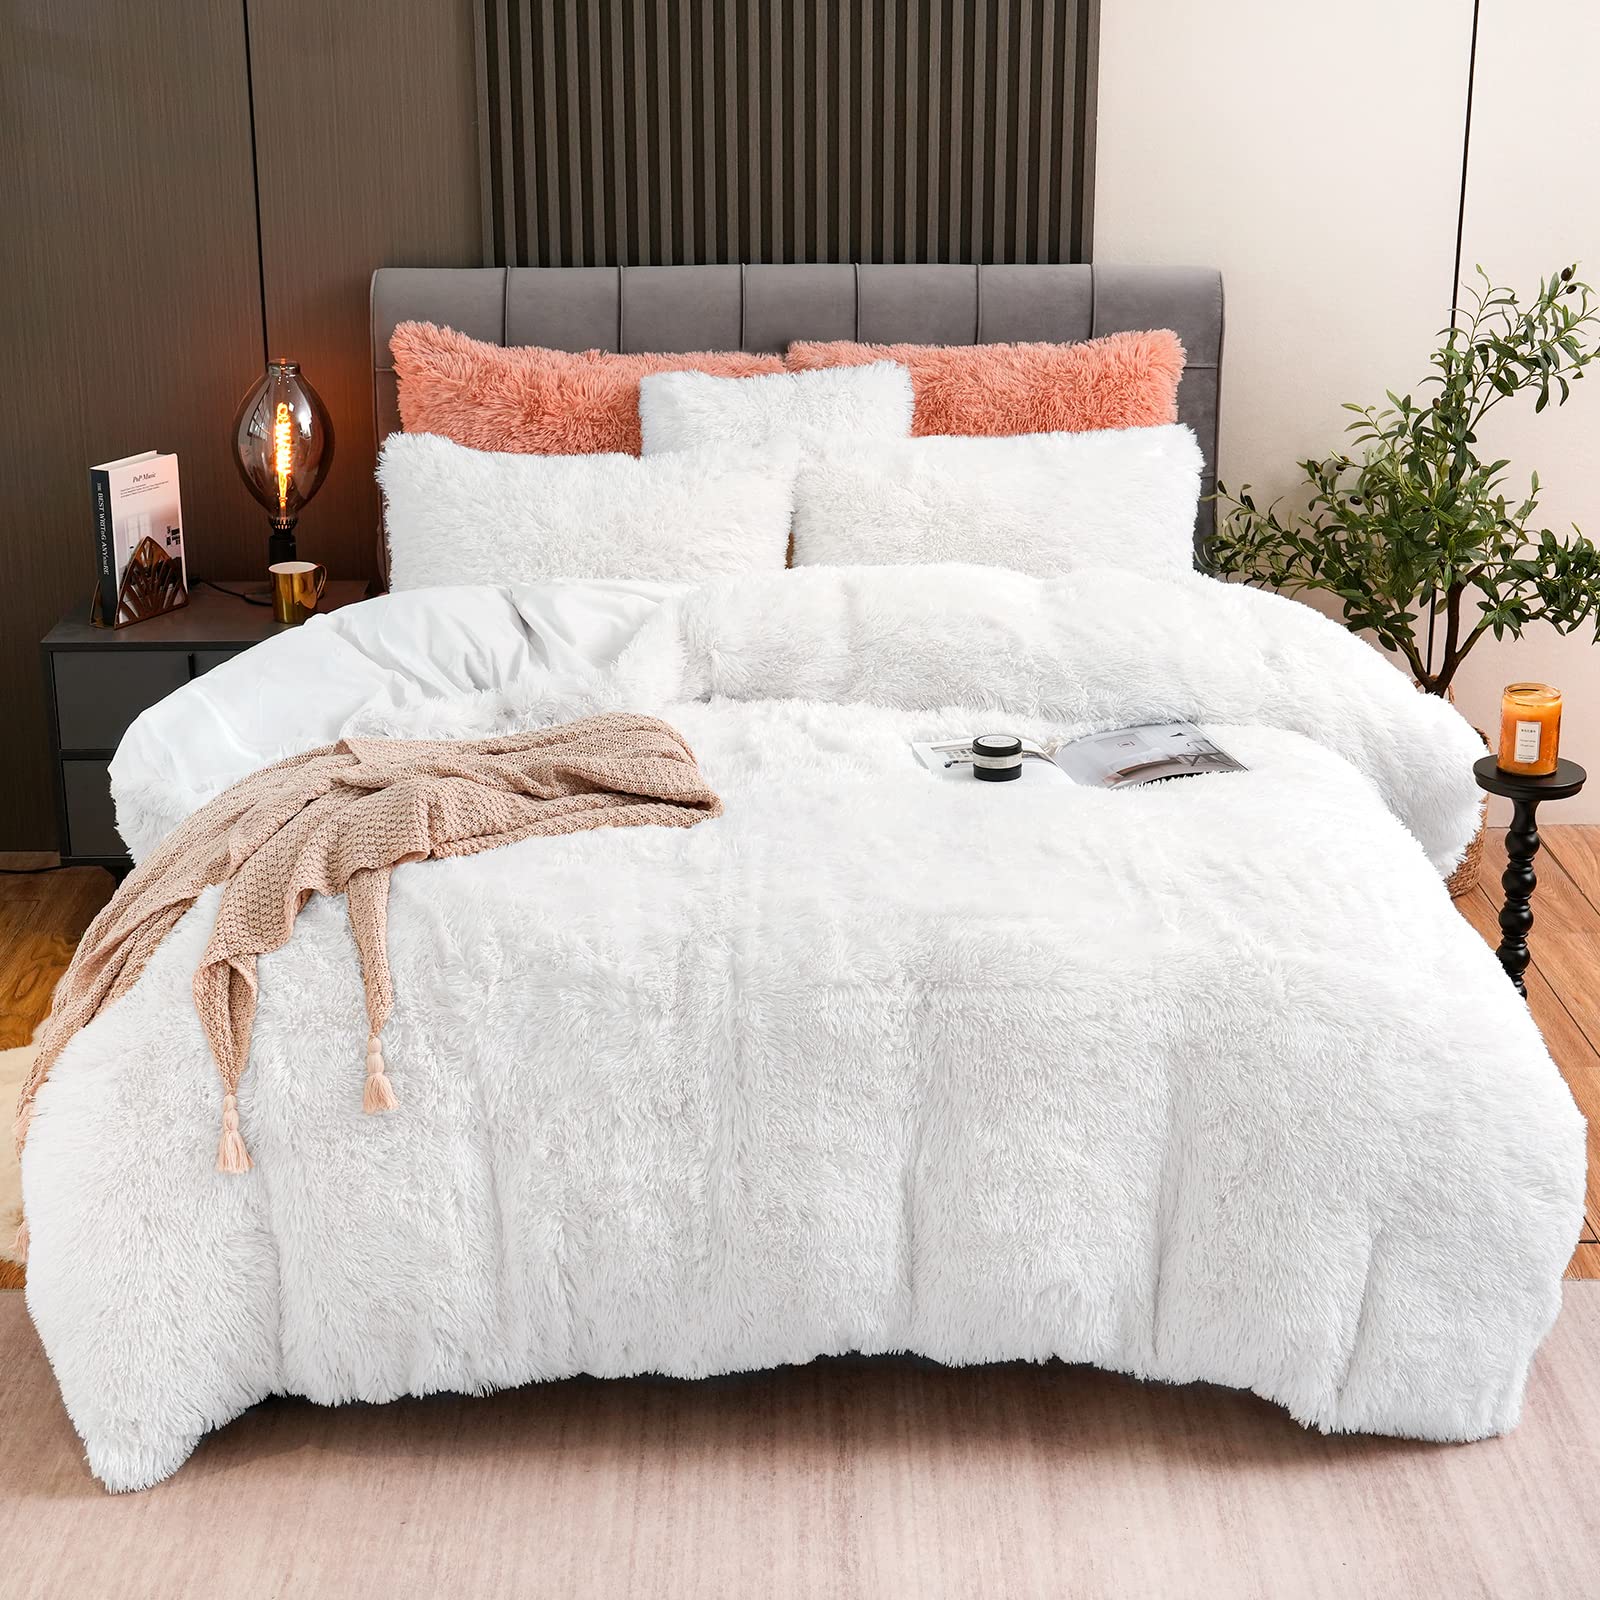 BLEUM CADE Fluffy Plush White Duvet Cover Set Twin Size, Luxury Ultra Soft Velvet Fuzzy Comforter Cover Bed Sets 3Pcs(1 Faux Fur Duvet Cove